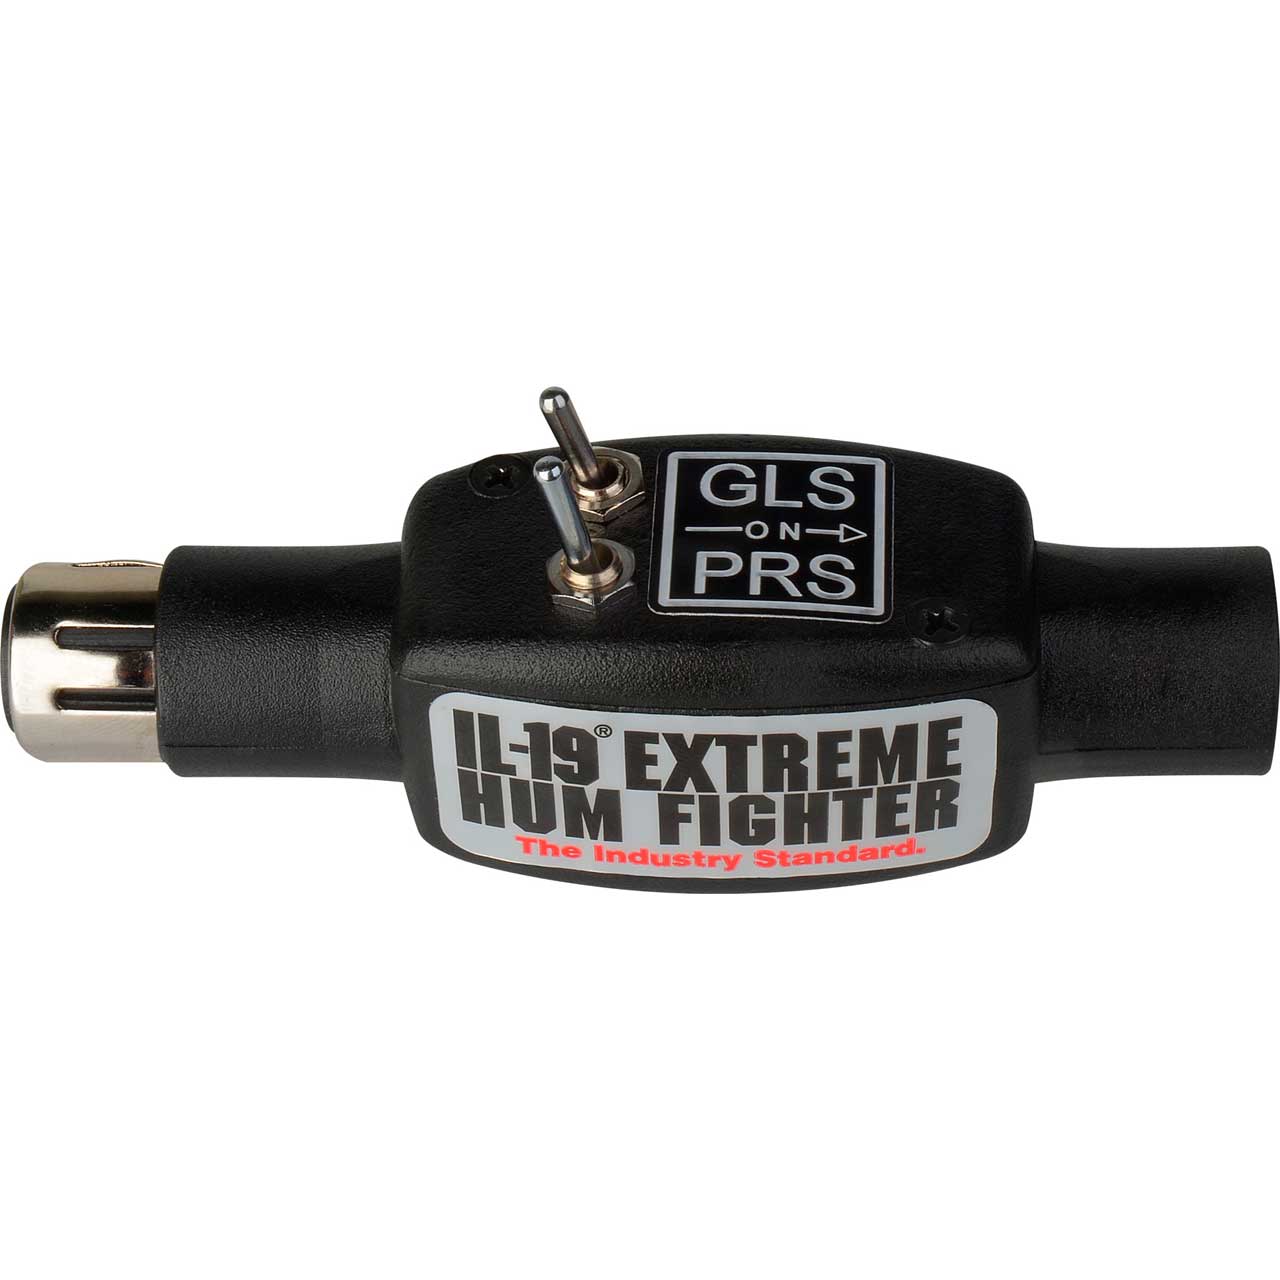 Sescom IL-19-PRS-GLS Pro Audio Hum Eliminator Inline with Phase Switch